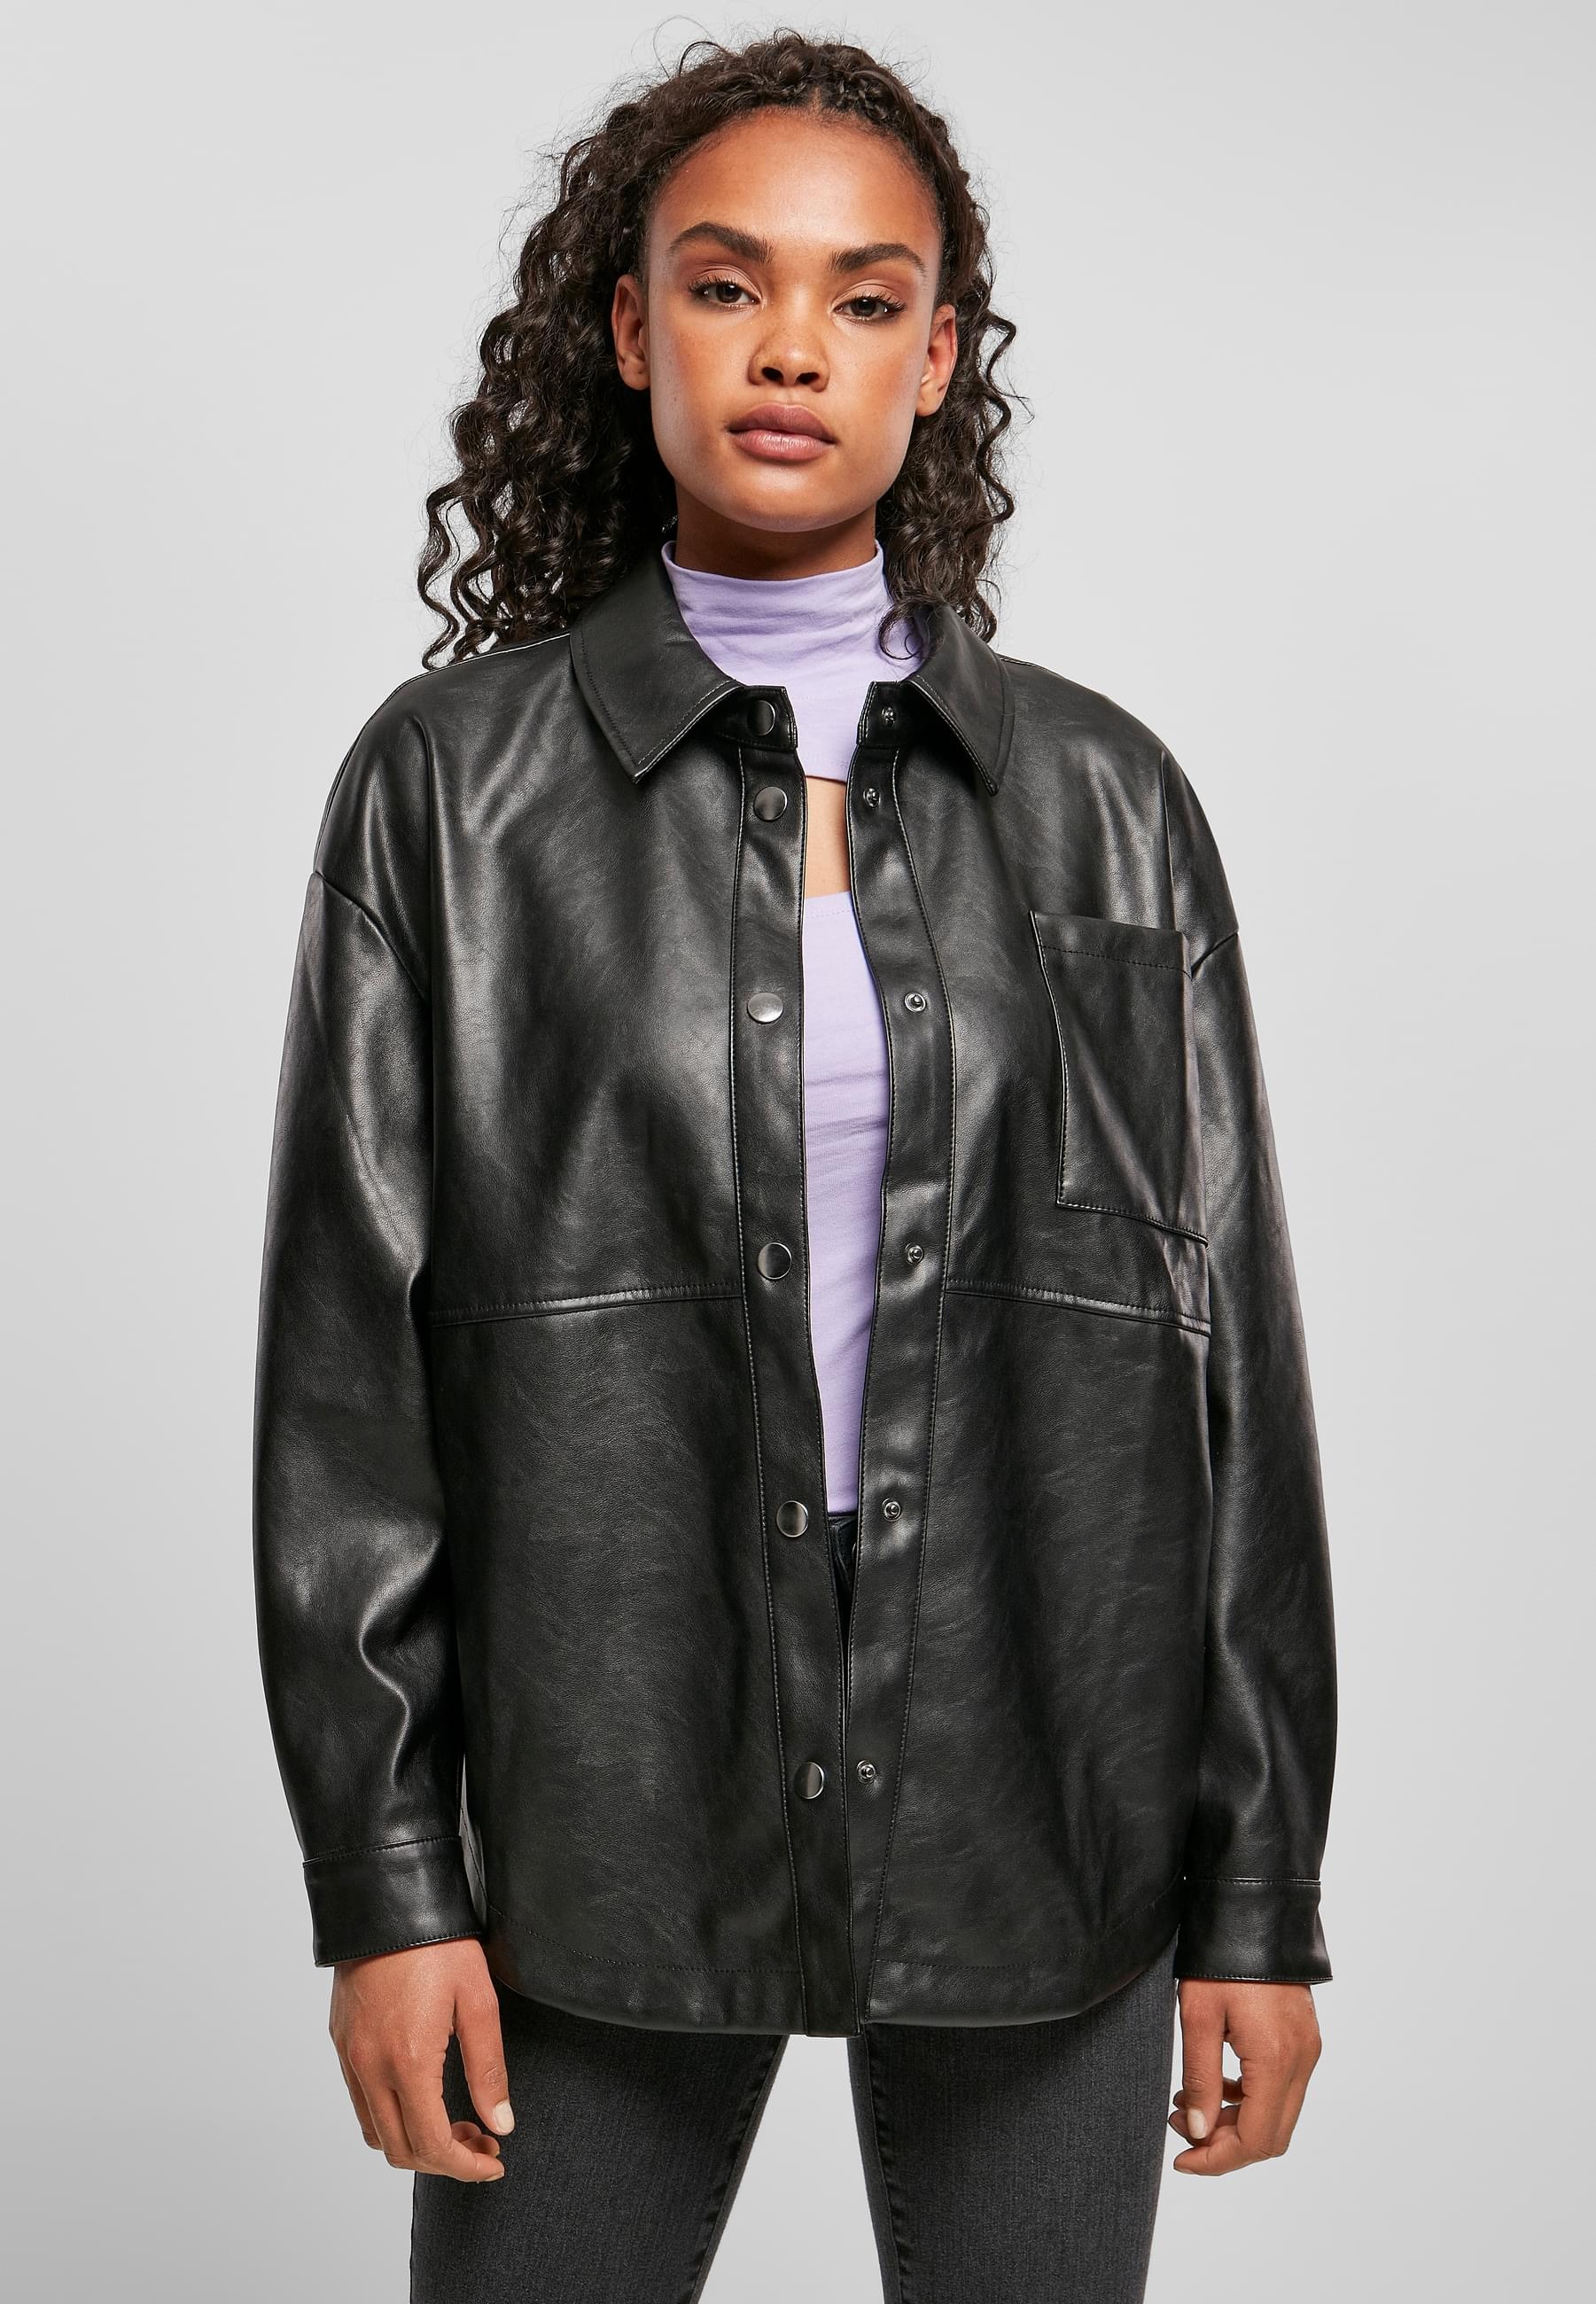 URBAN CLASSICS Hemdbluse »Urban Classics Damen Ladies Faux Leather Overshirt«